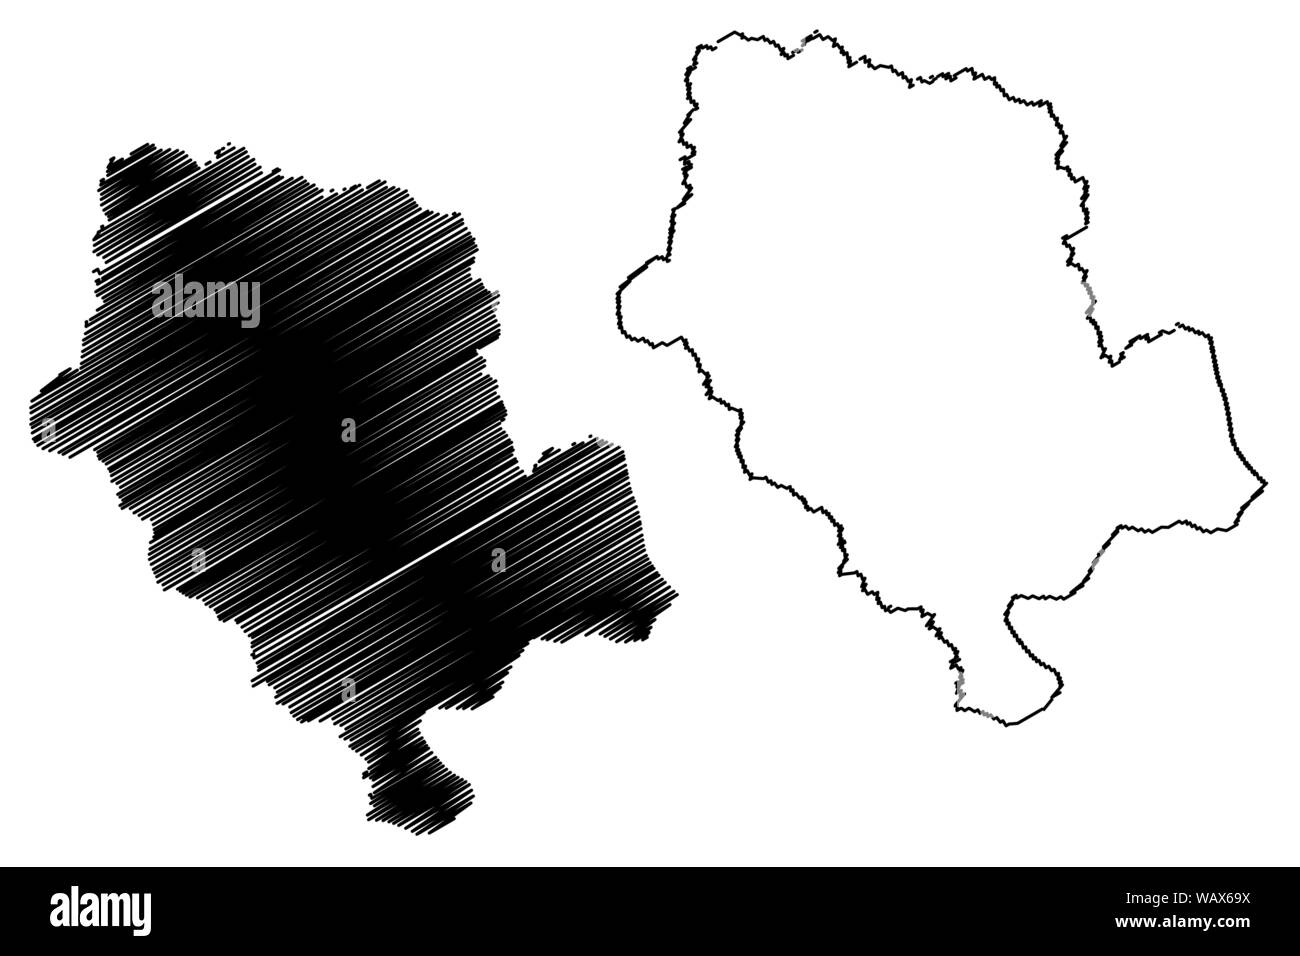 Der Provinz Cibitoke (Republik Burundi, Provinzen von Burundi, Western Region) Karte Vektor-illustration, kritzeln Skizze Cibitoke Karte Stock Vektor